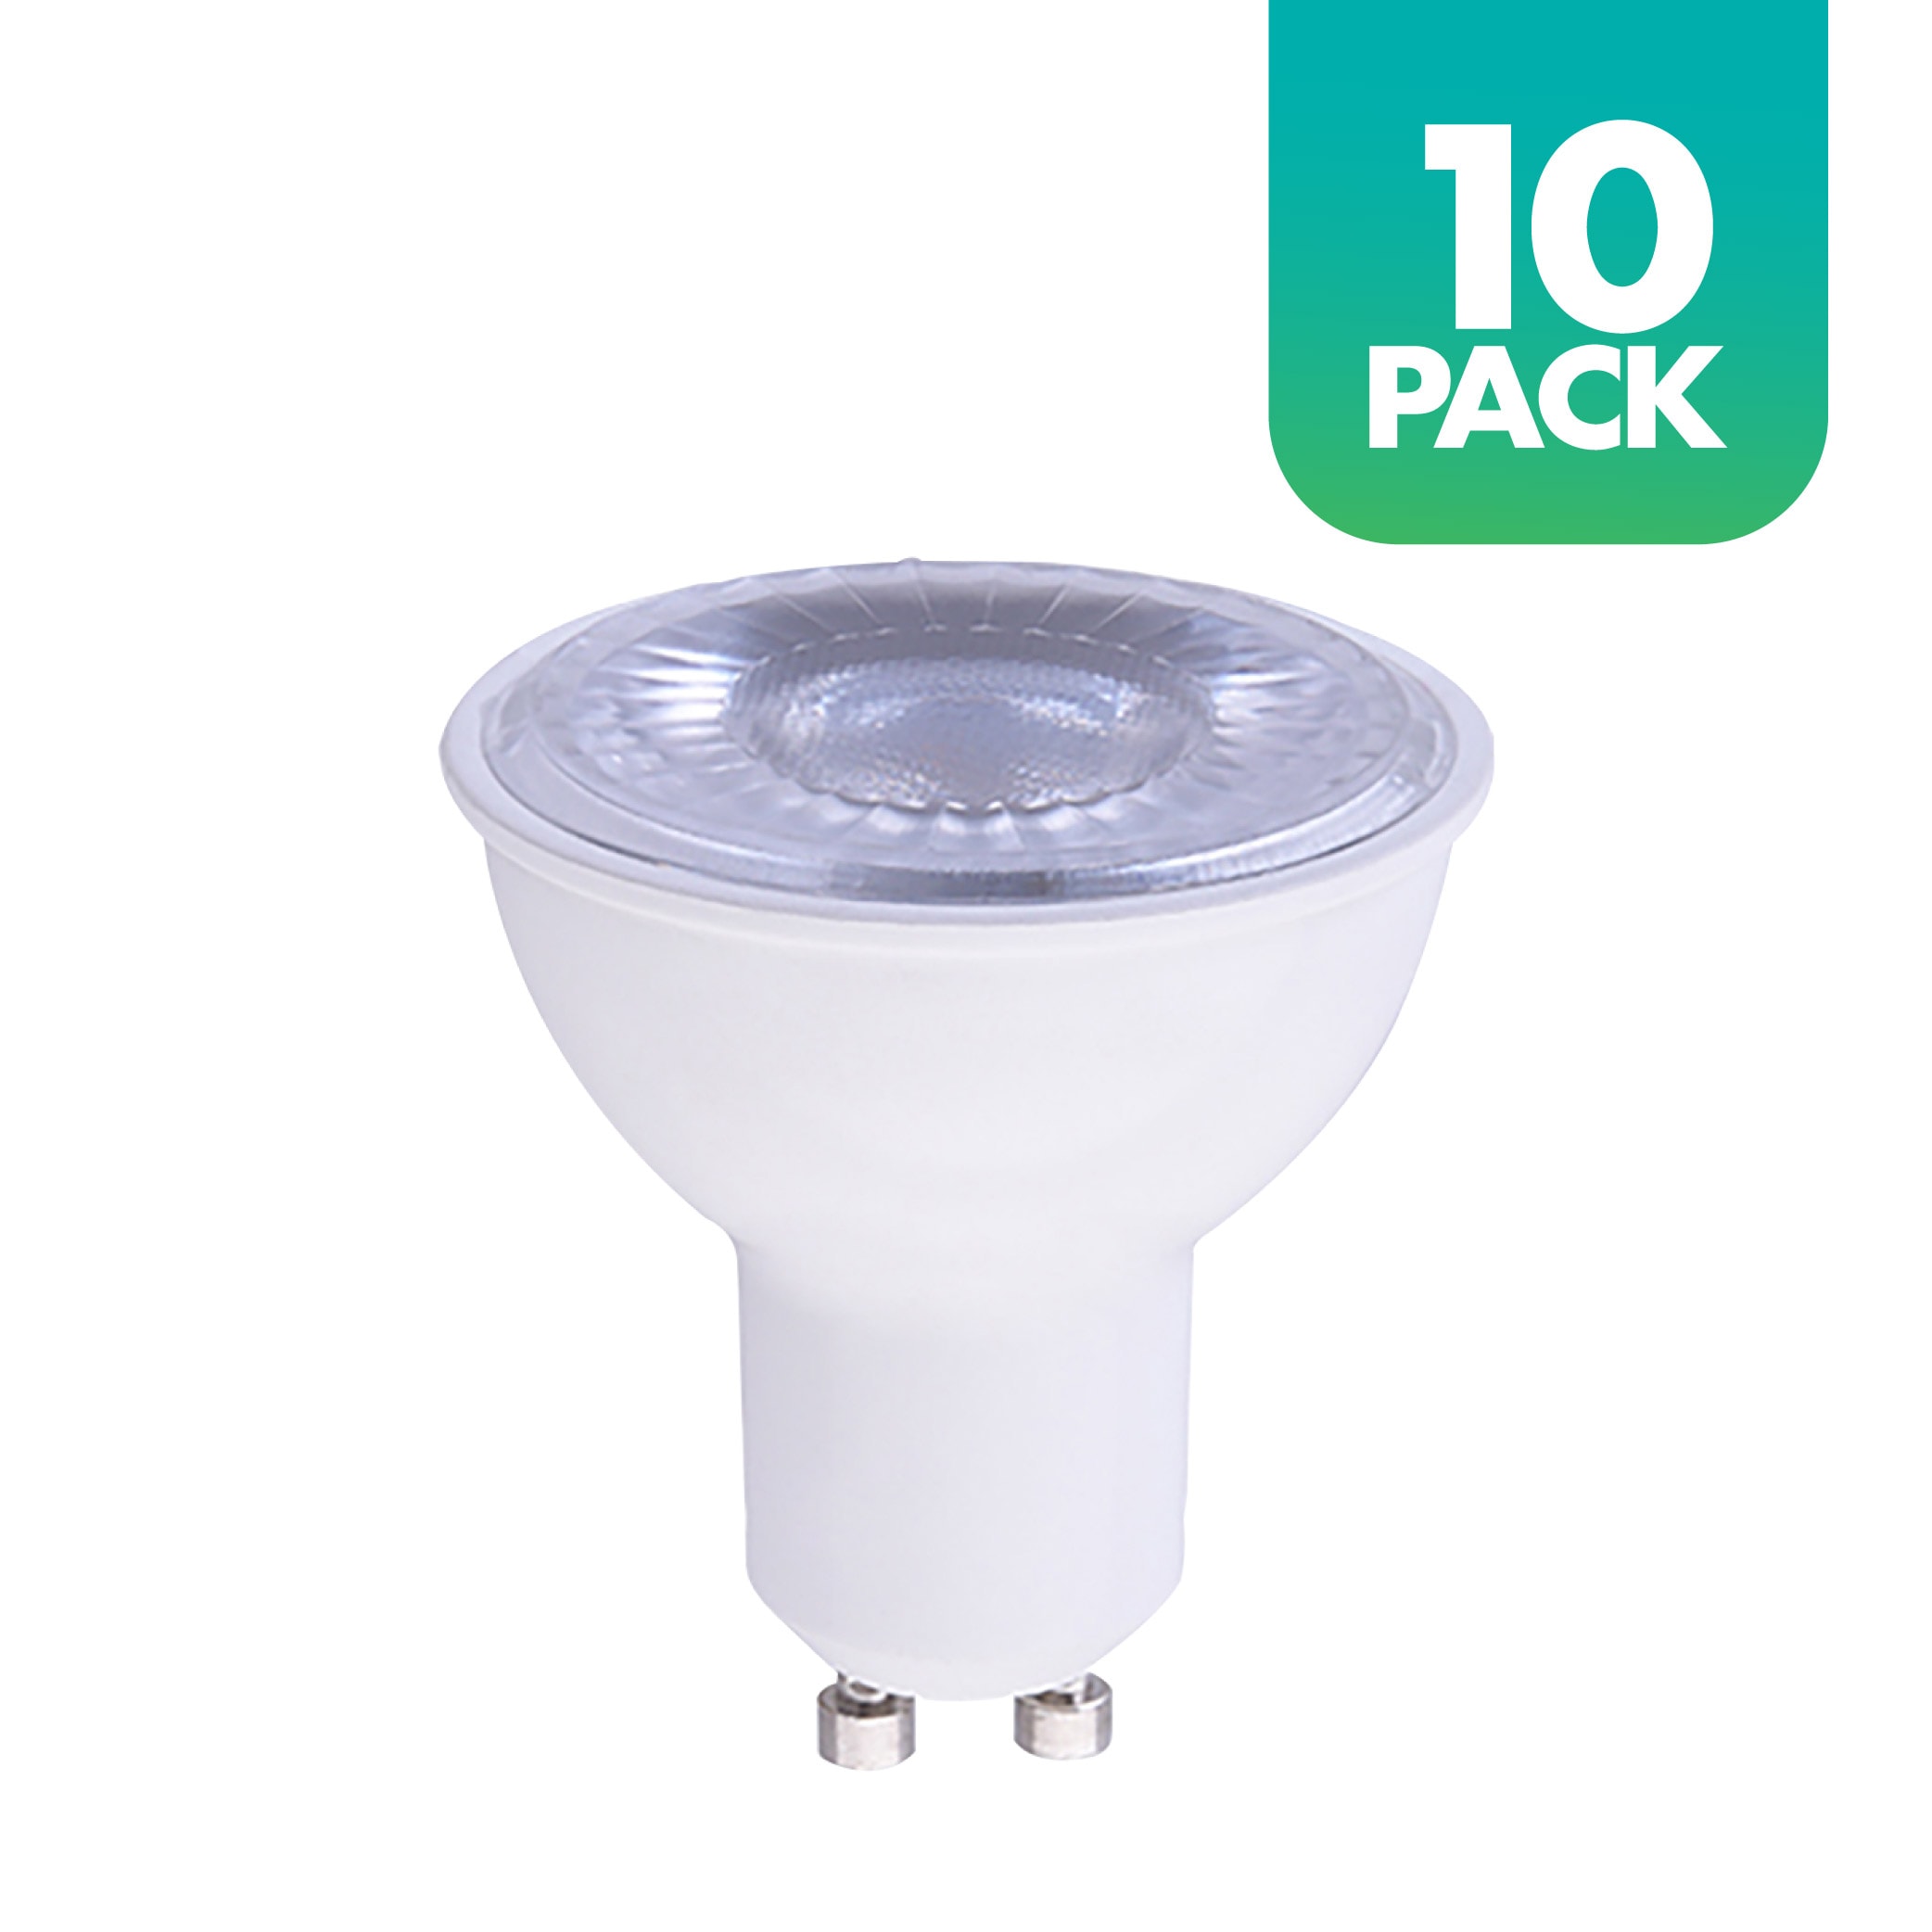 Buy Philips Classic Glass MR16 GU5.3 LED Floodlight Light Bulb